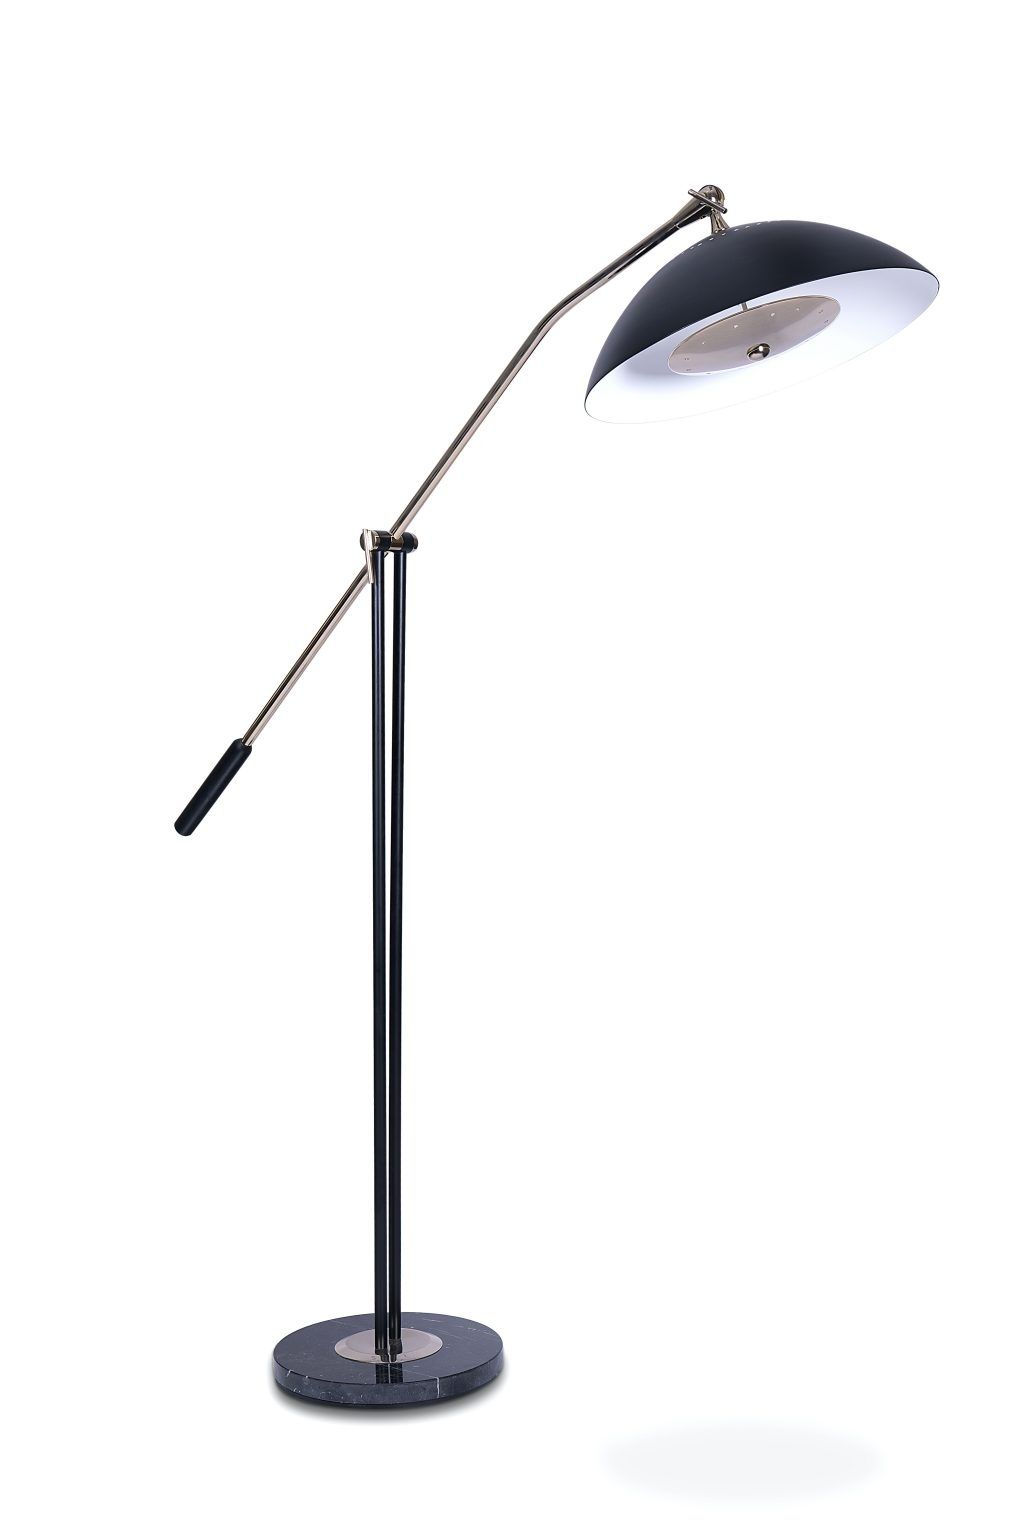 Floor Lamps : Cordless Reading Lamps Floor Home Depot Target Outdoor Within Target Outdoor Wall Lighting (View 9 of 15)